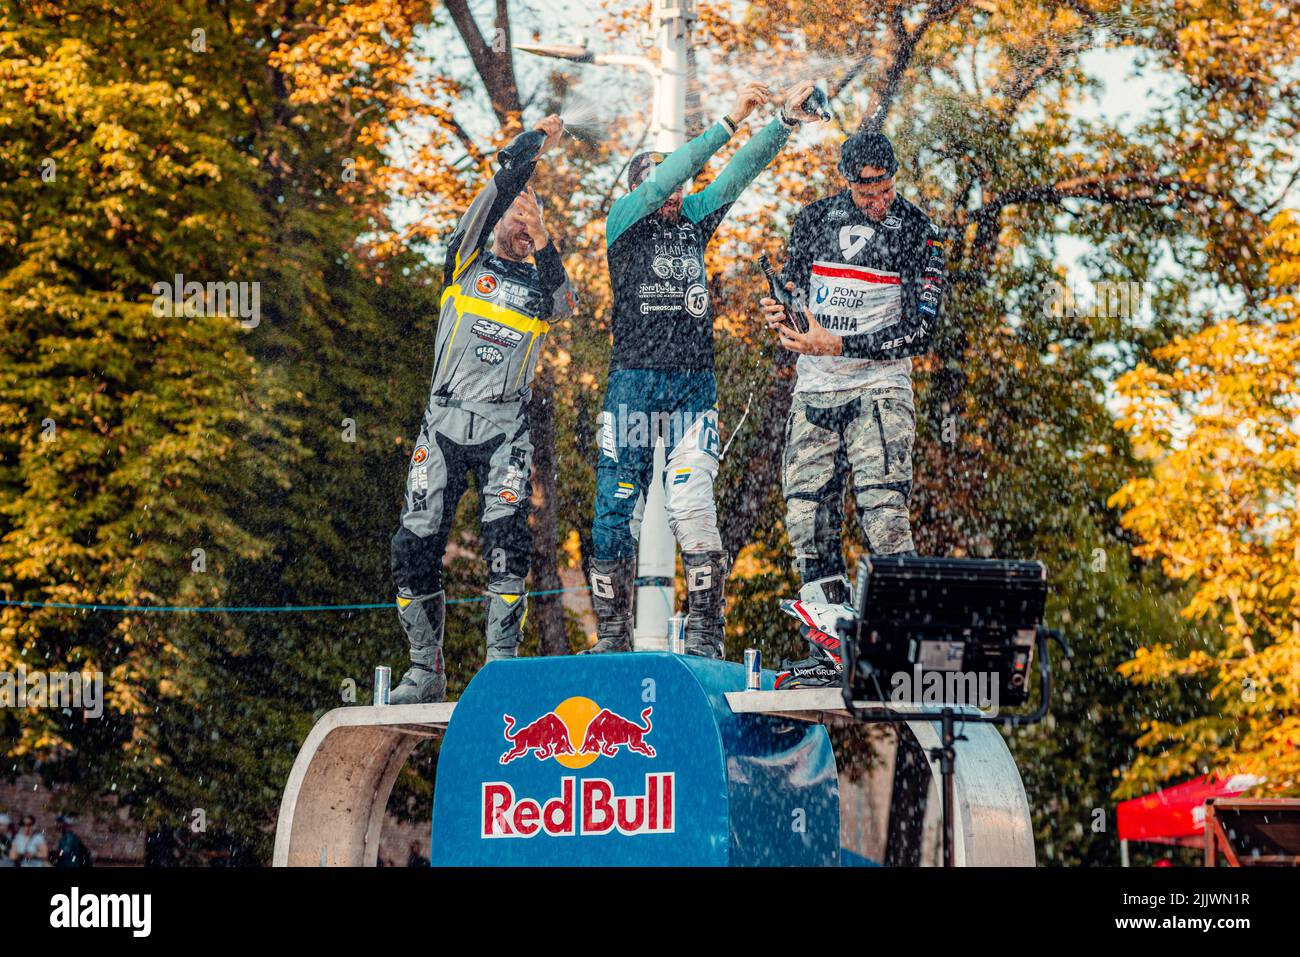 the winners celebrating their victory during Red Bull Romaniacs hard enduro Rallye - Prolog in Sibiu city, Romania Stock Photo